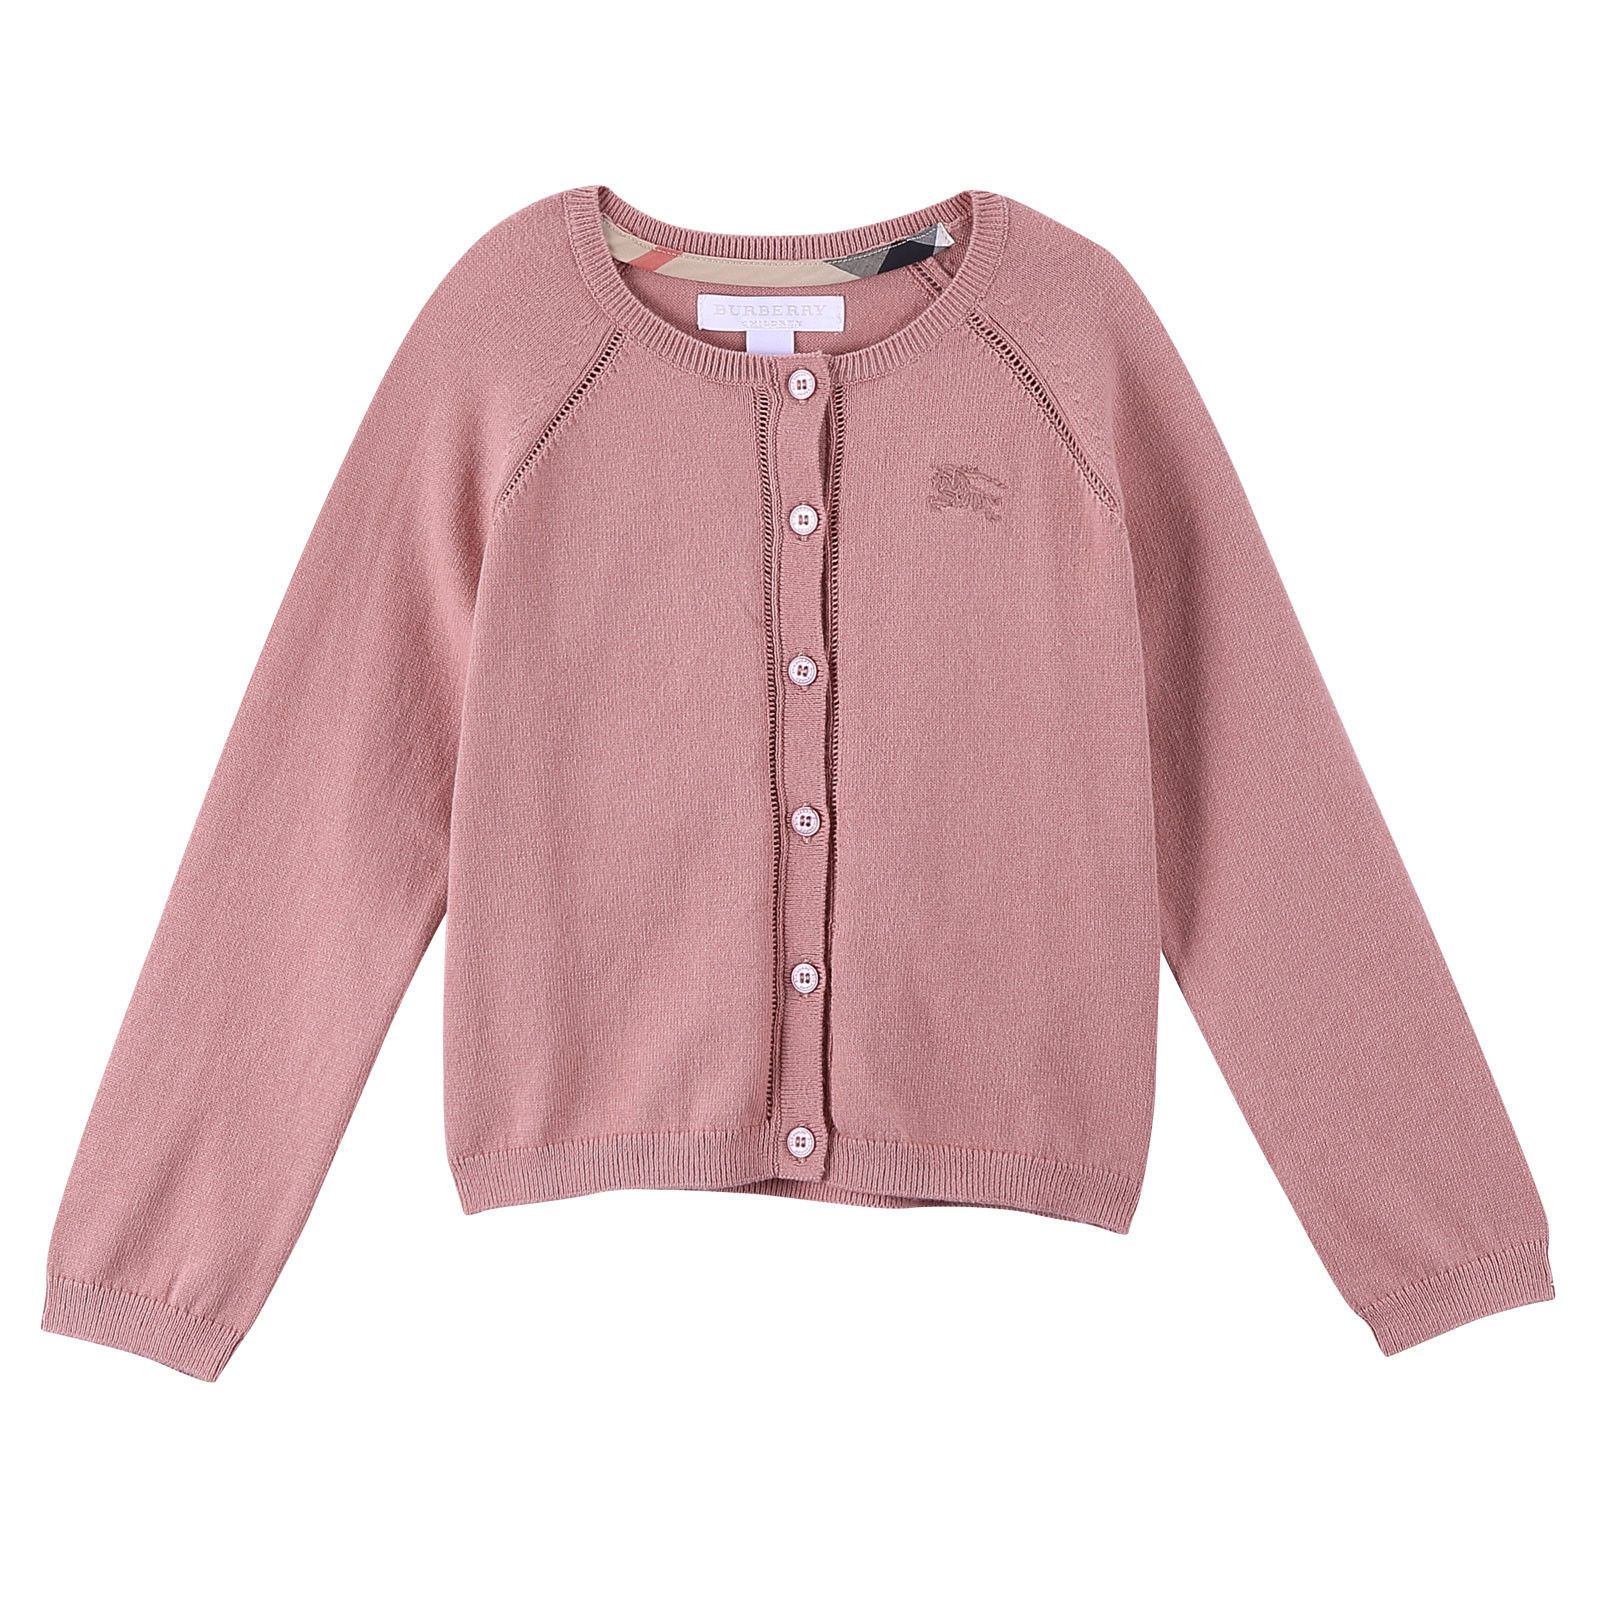 Girls Light Pink Cotton Cardigan - CÉMAROSE | Children's Fashion Store - 1